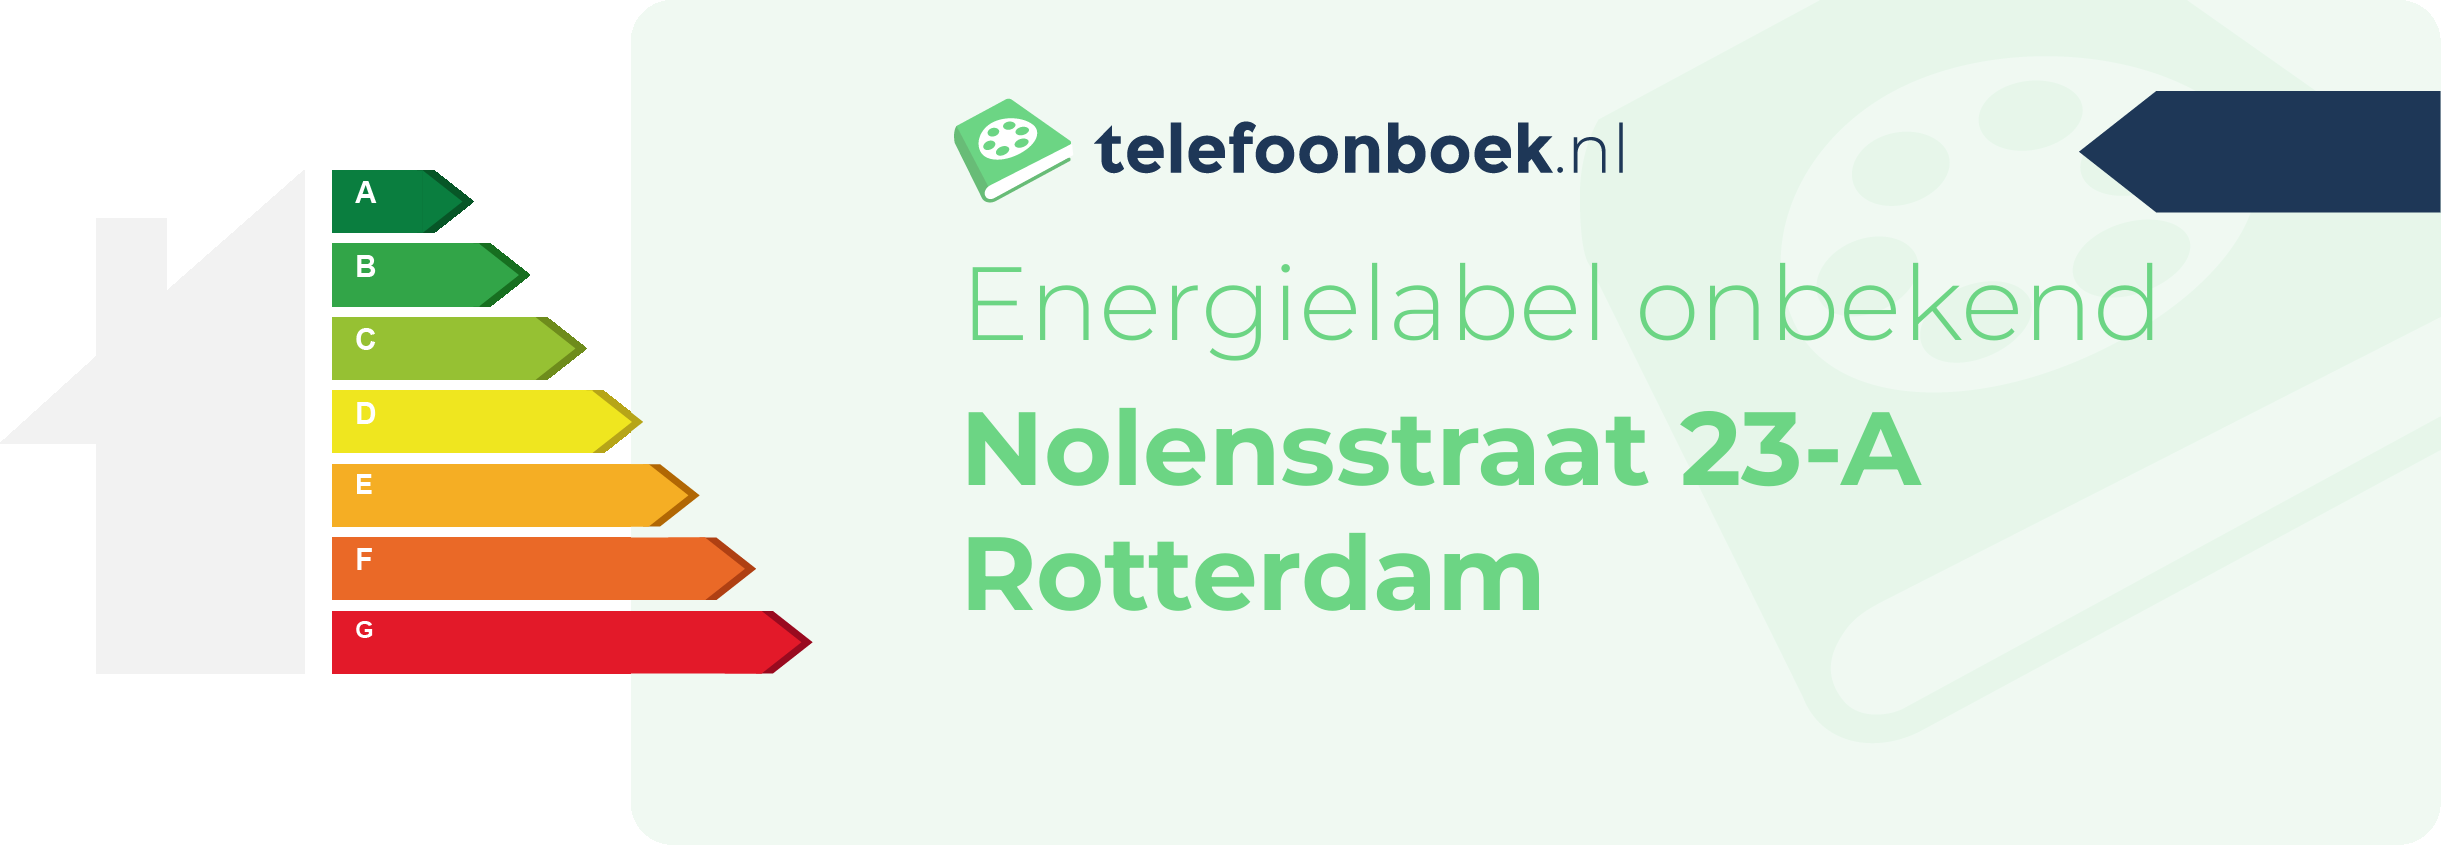 Energielabel Nolensstraat 23-A Rotterdam